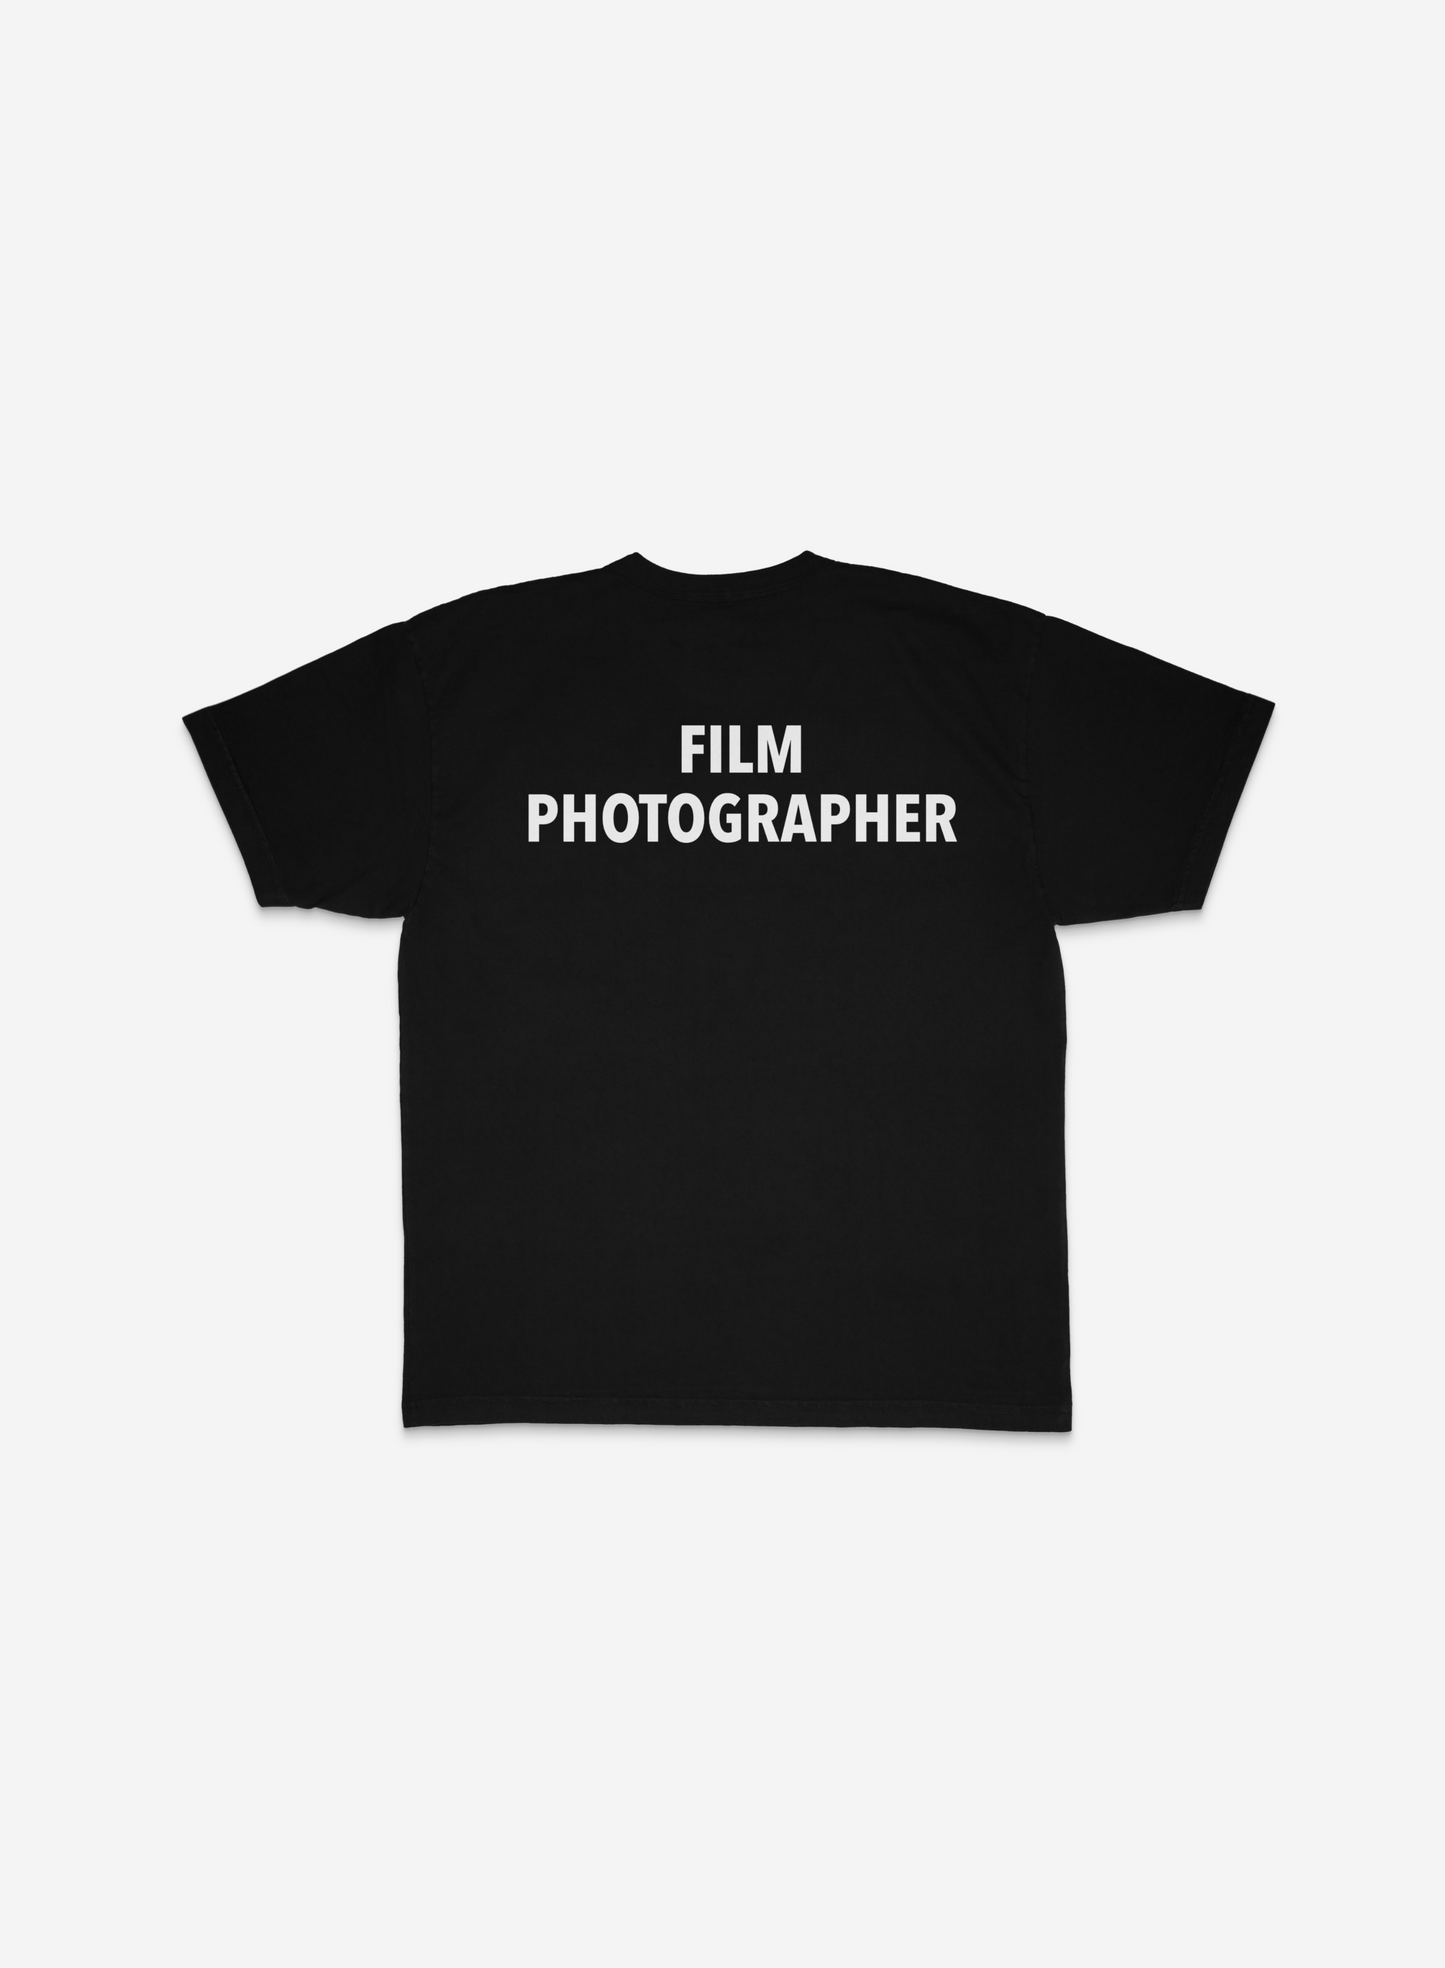 FILM PHOTOGRAPHER T-SHIRT (BLACK/WHITE)